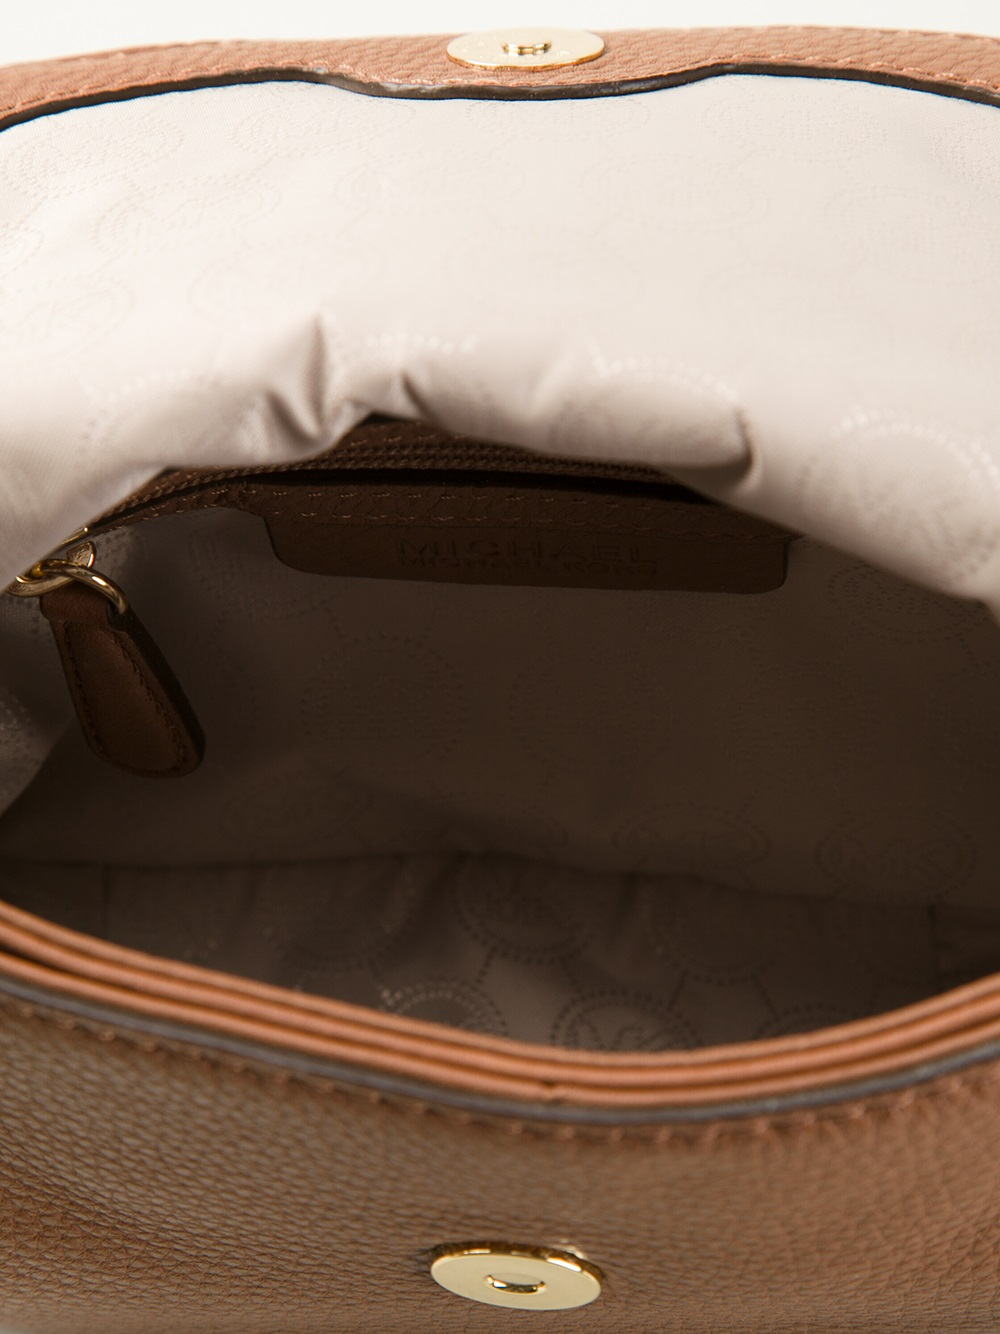 MICHAEL Michael Kors Bedford Leather Cross-Body Bag in Brown - Lyst